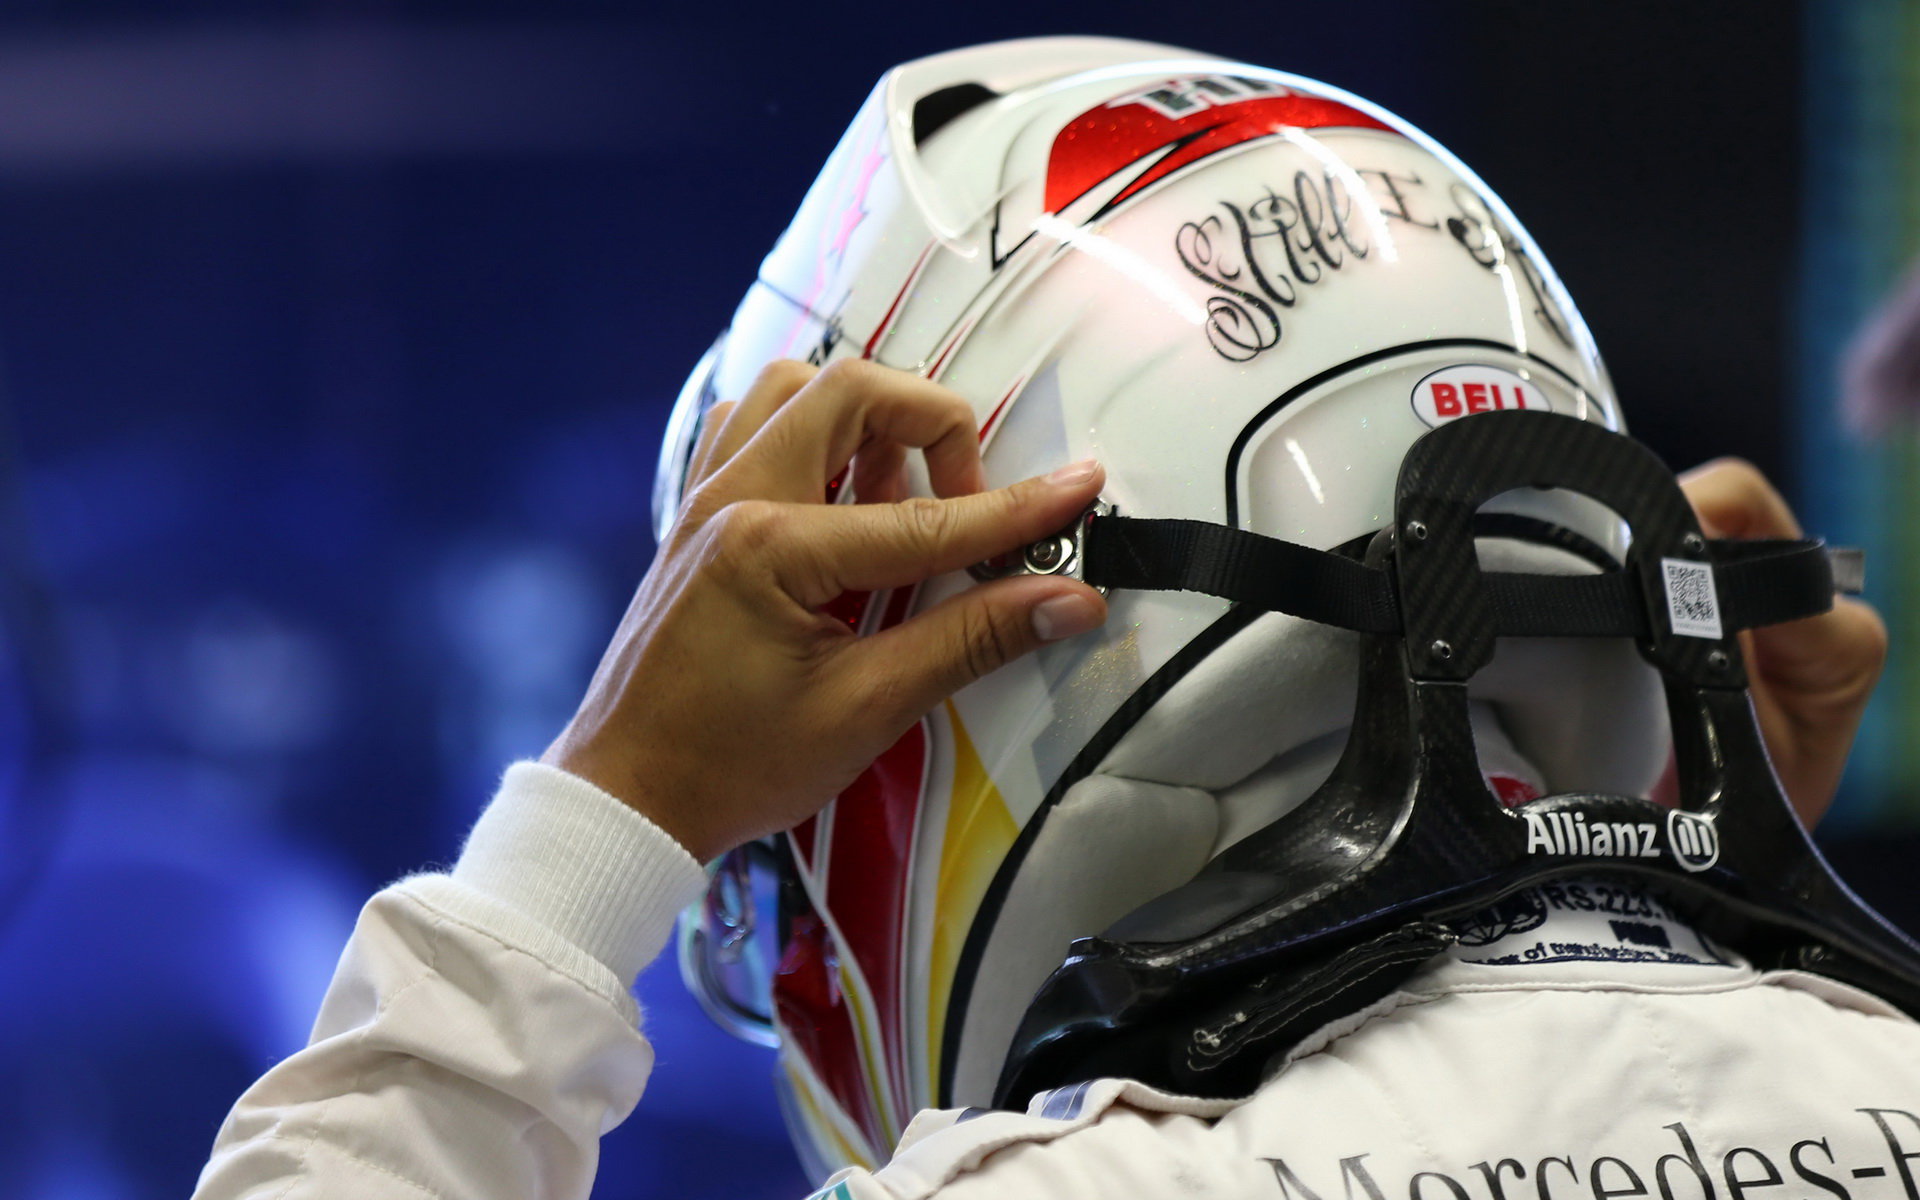 Lewis Hamilton, GP Singapuru (Singapur)